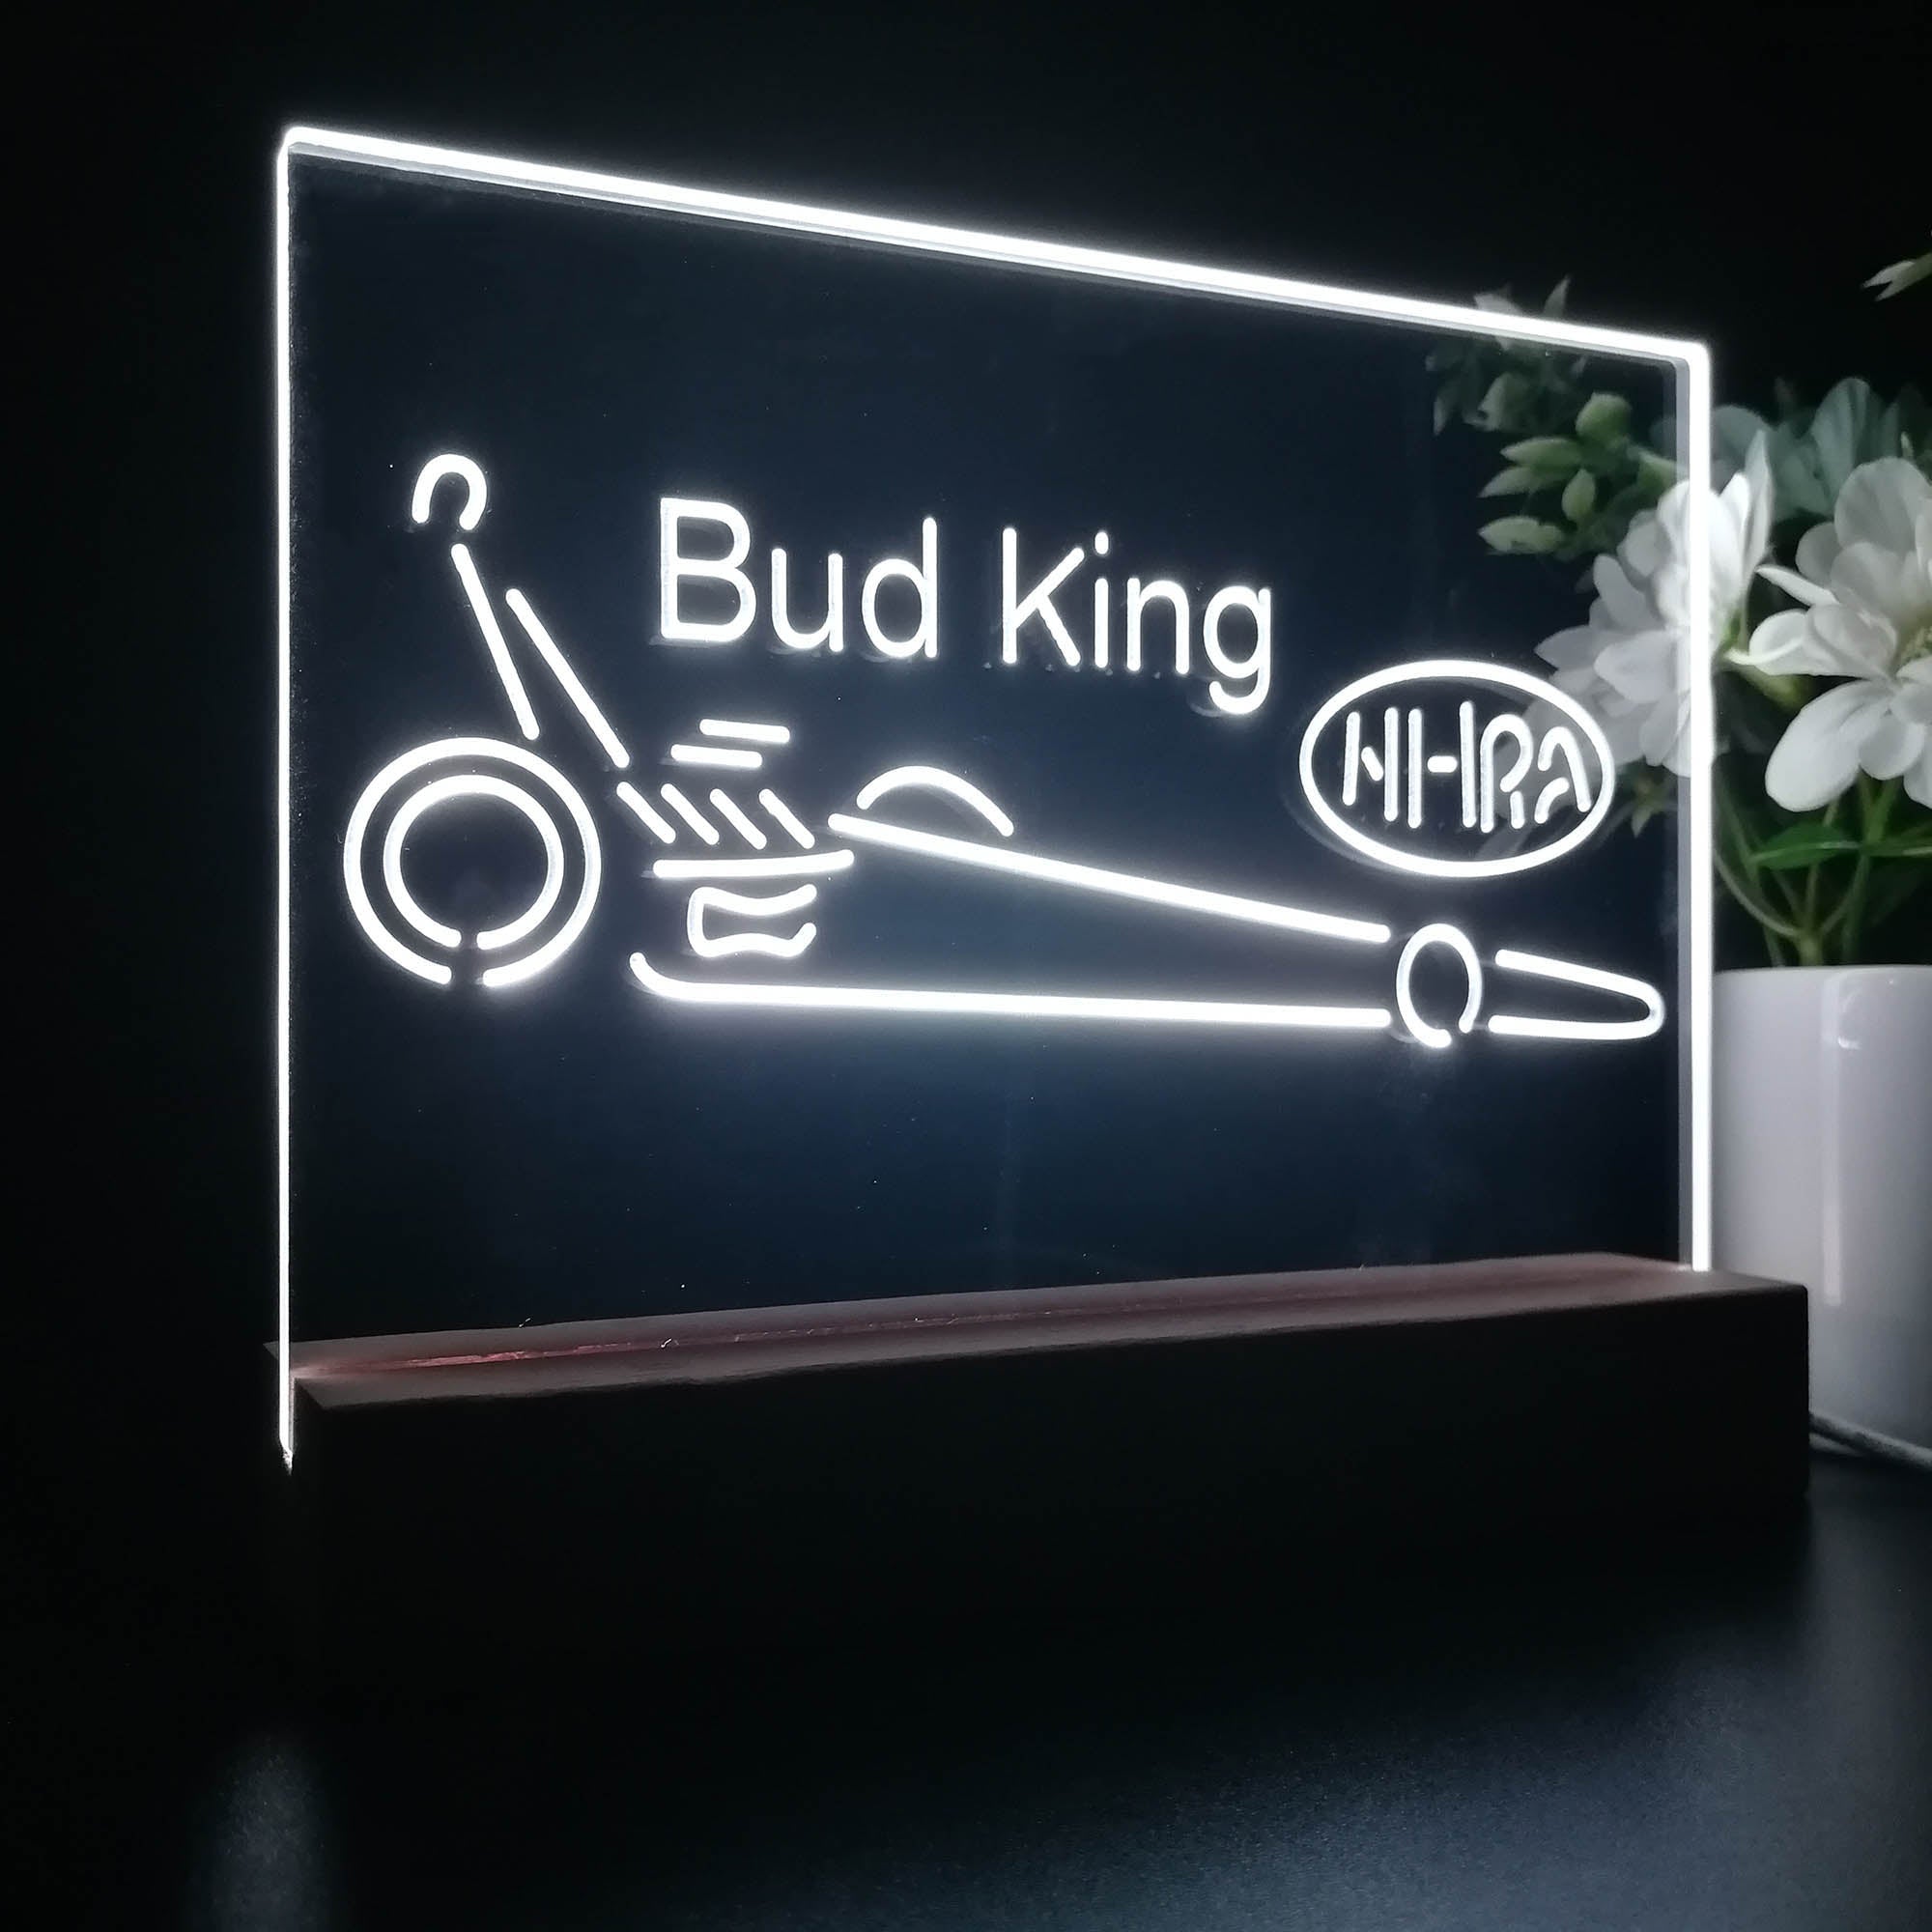 Bud King Nhra Dragster 3D LED Optical Illusion Sport Team Night Light